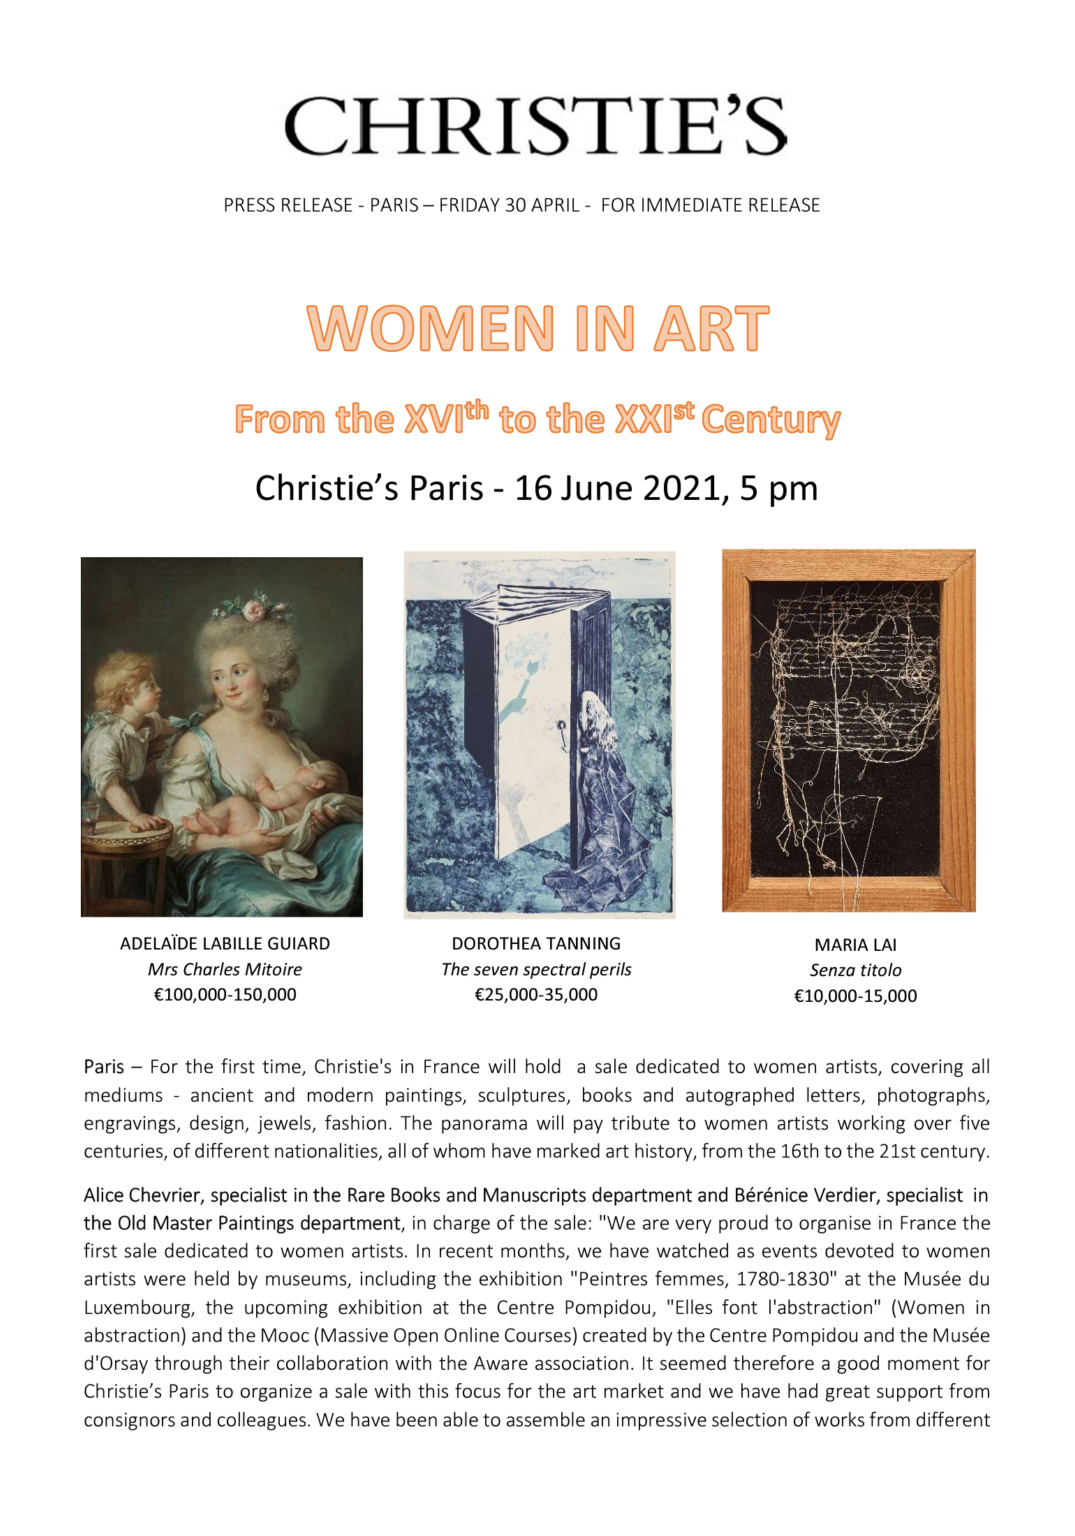 Christie's Press Release: Women in Art from the XVI to the XXI Century, Paris, 16 June 2021.